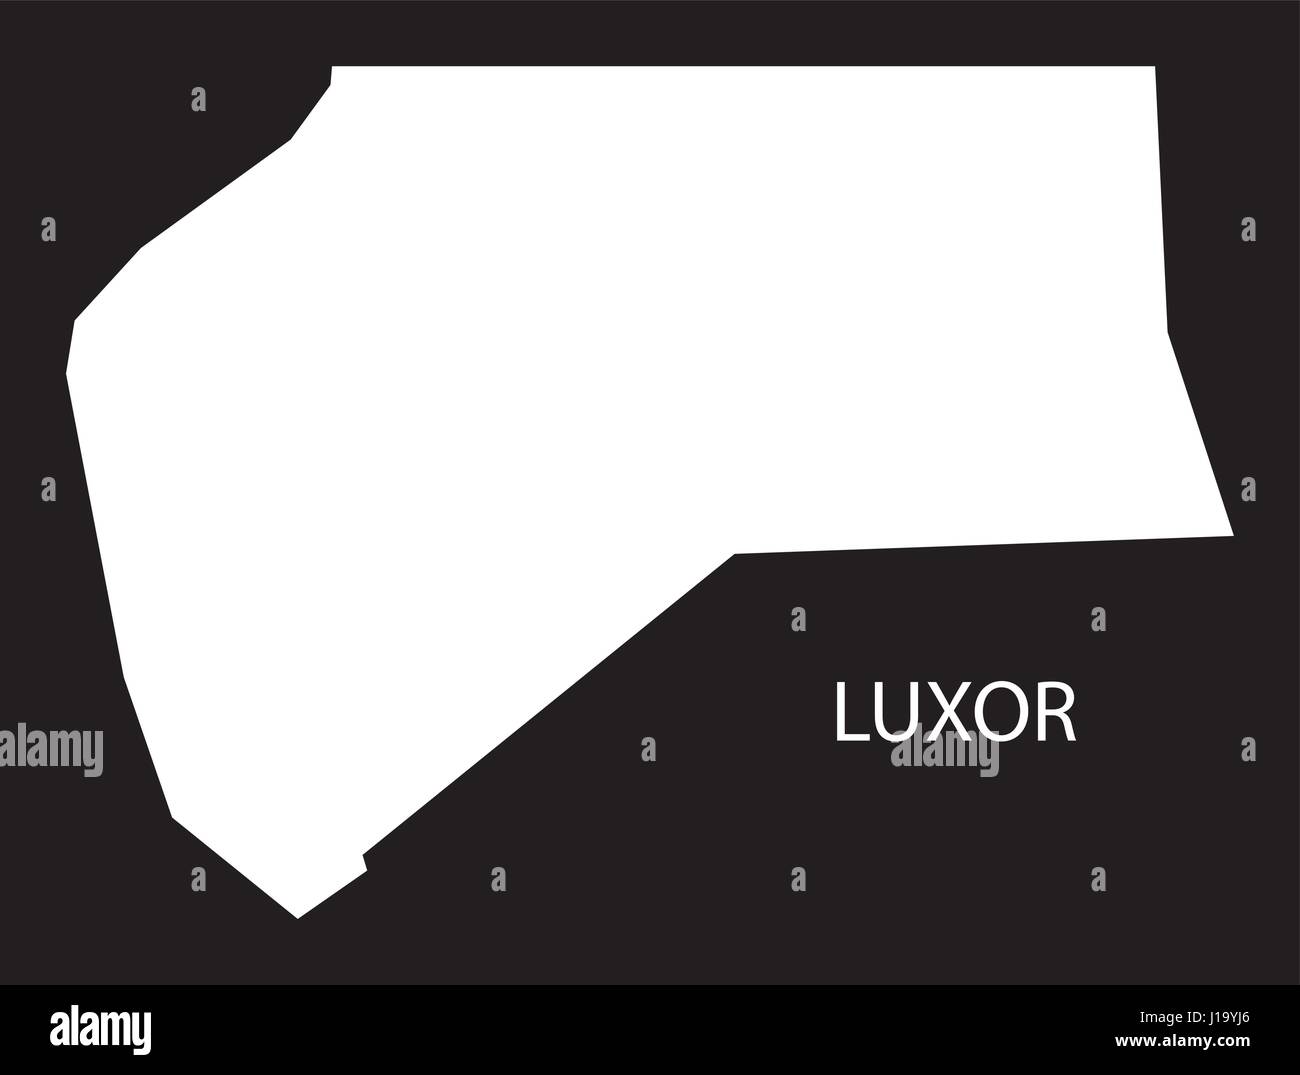 Luxor Ägypten Karte schwarz invertiert Silhouette Abbildung Stock Vektor